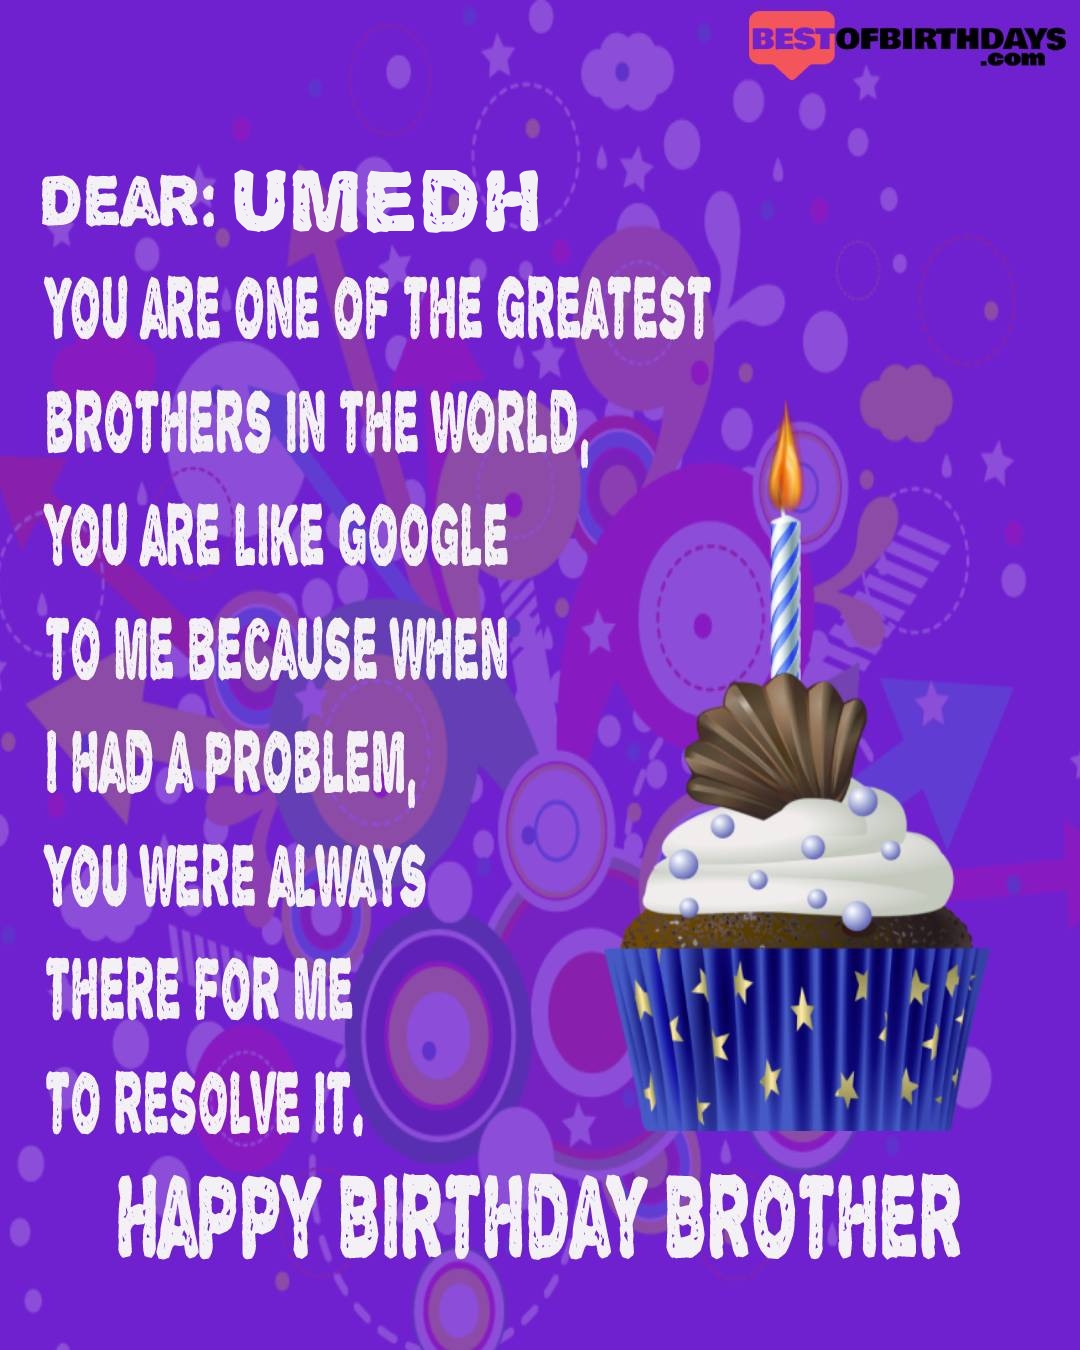 Happy birthday umedh bhai brother bro